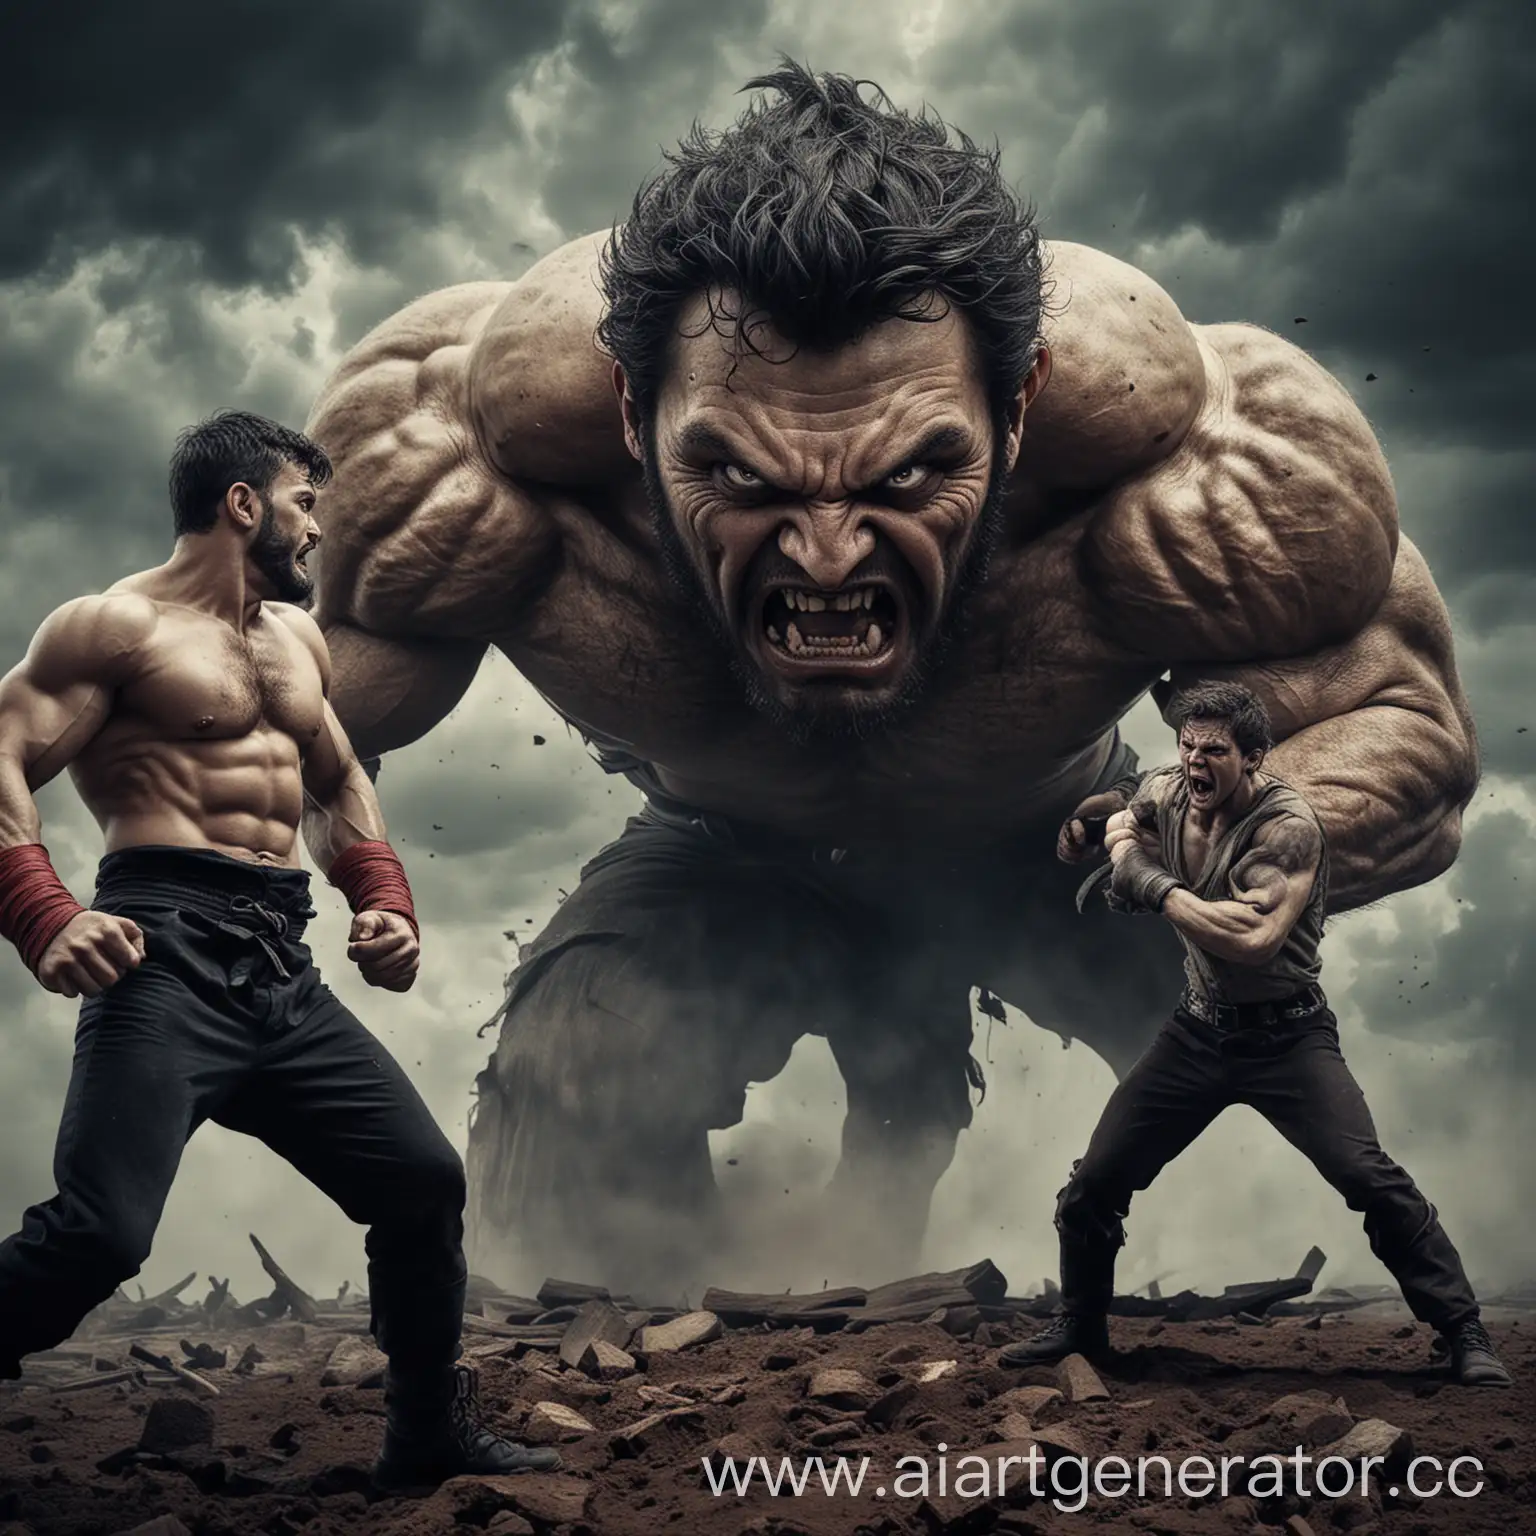 Intense-Battle-Strong-Man-Confronts-Malevolent-Giant